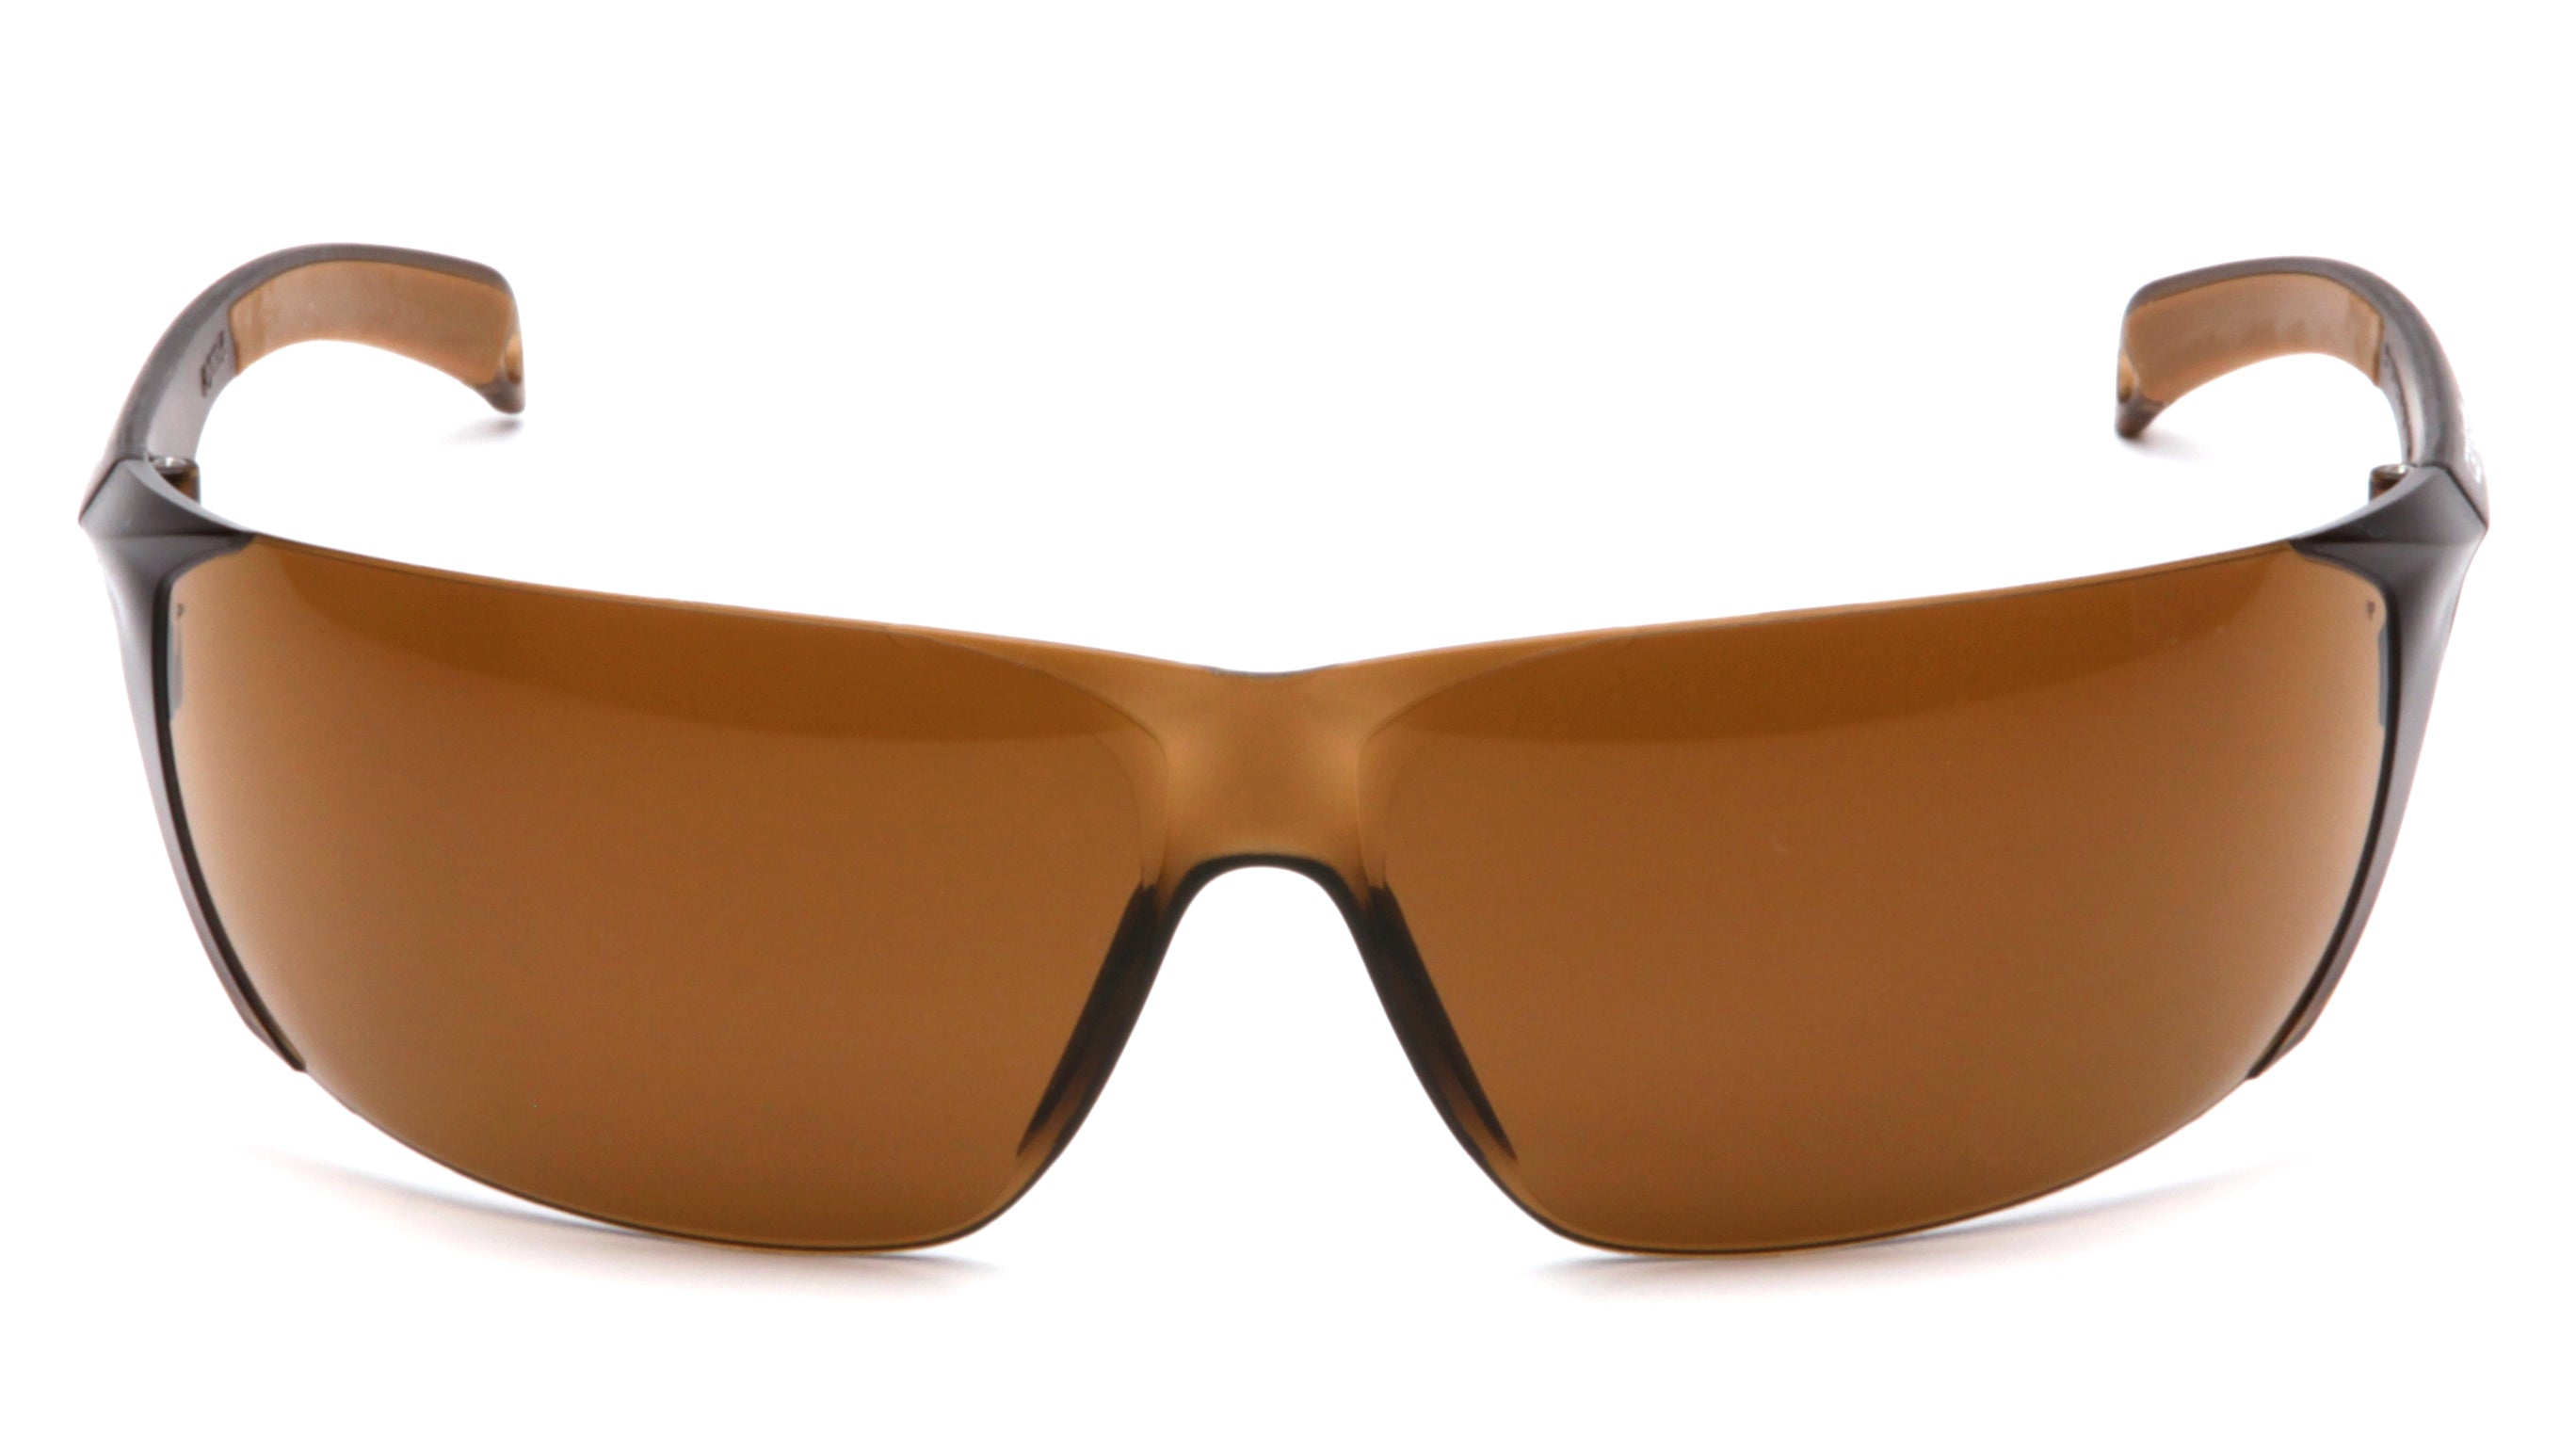 Carhartt Billings Sandstone Bronze Brown Safety Glasses Glasses Z87+